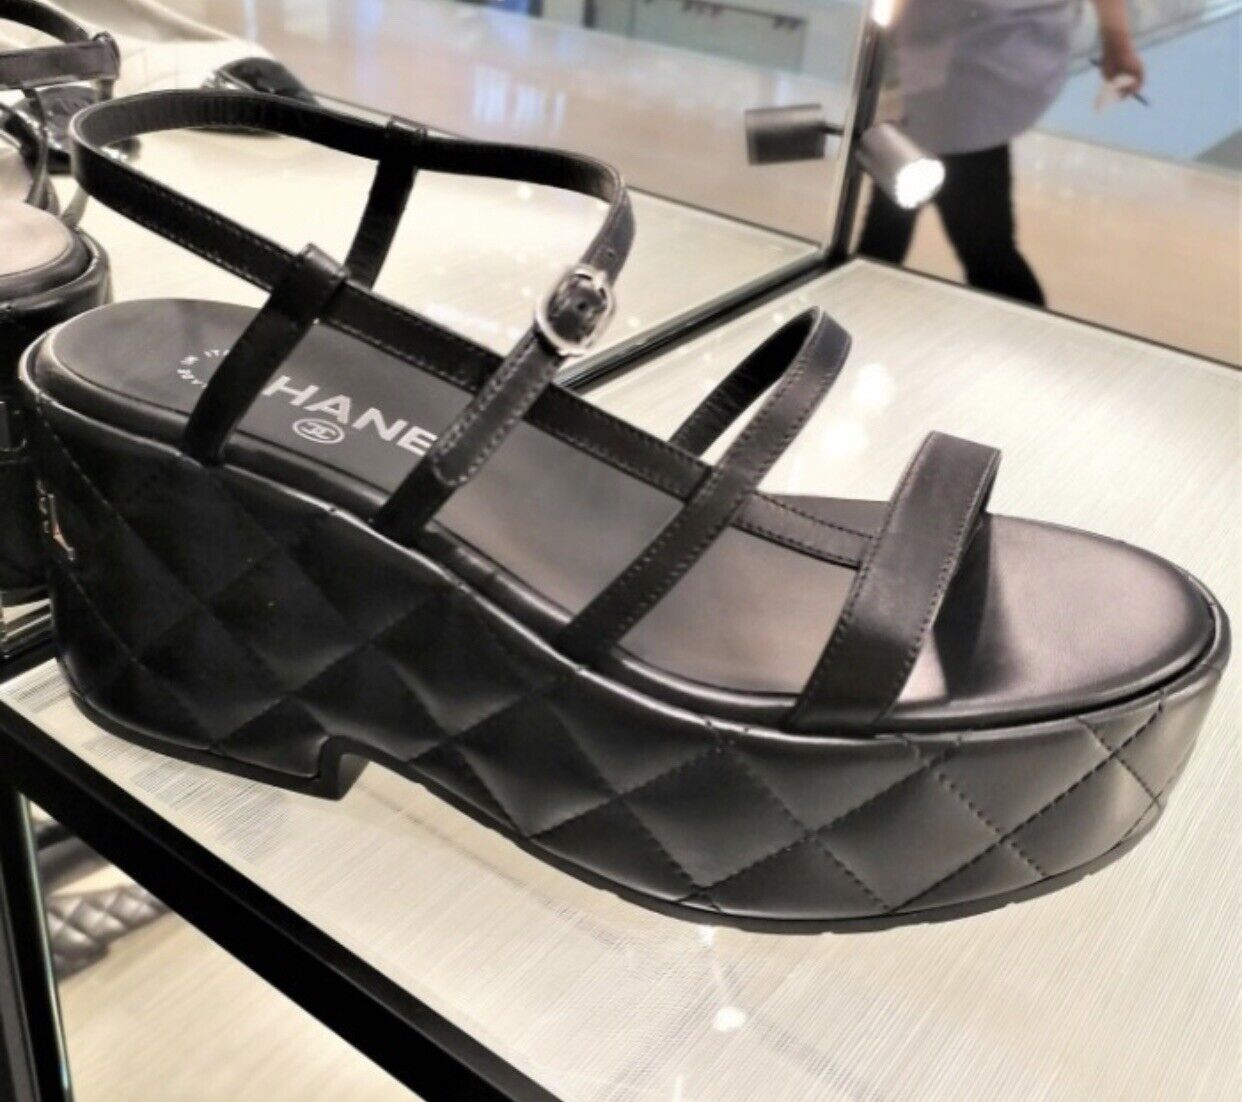 chanel platform wedge sandals